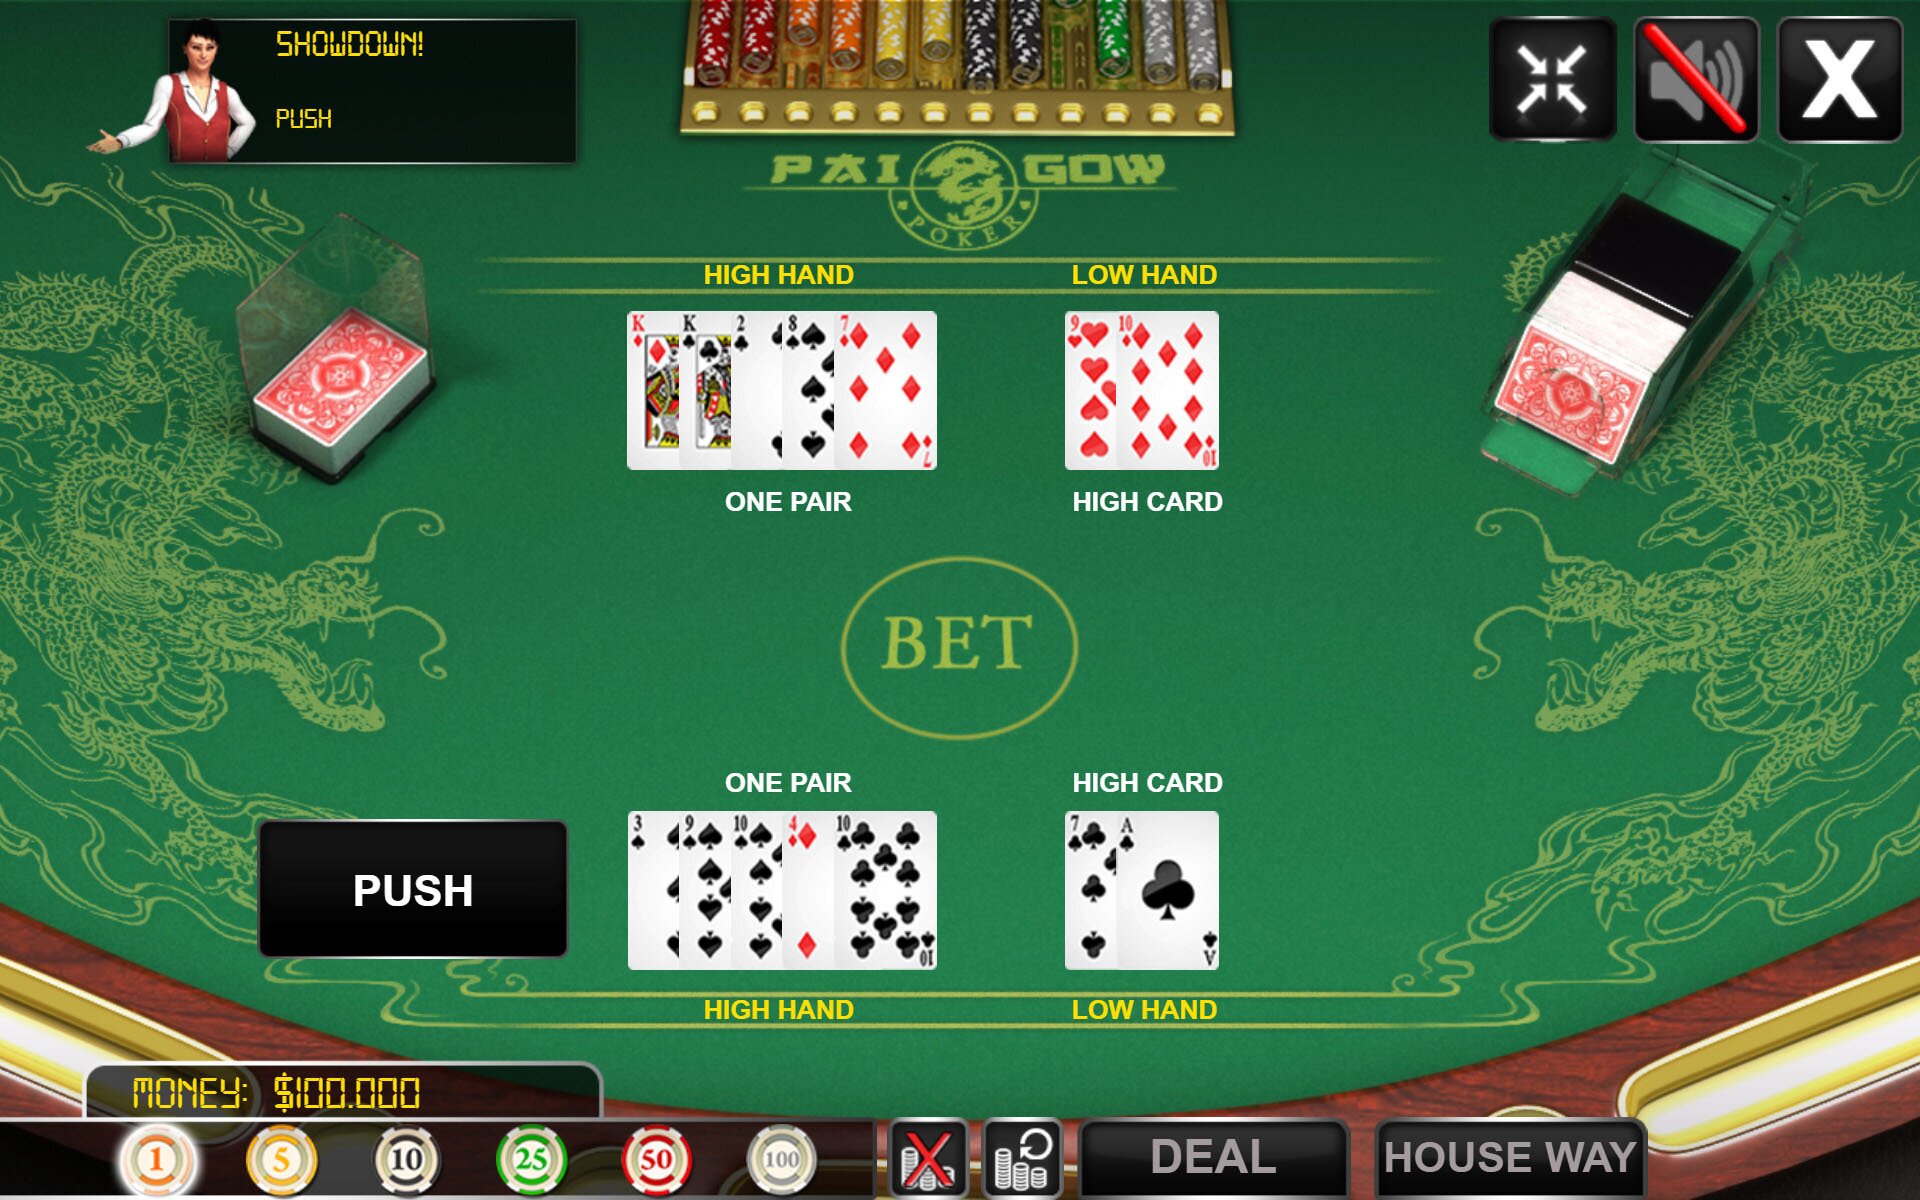 Pai Gow poker layout